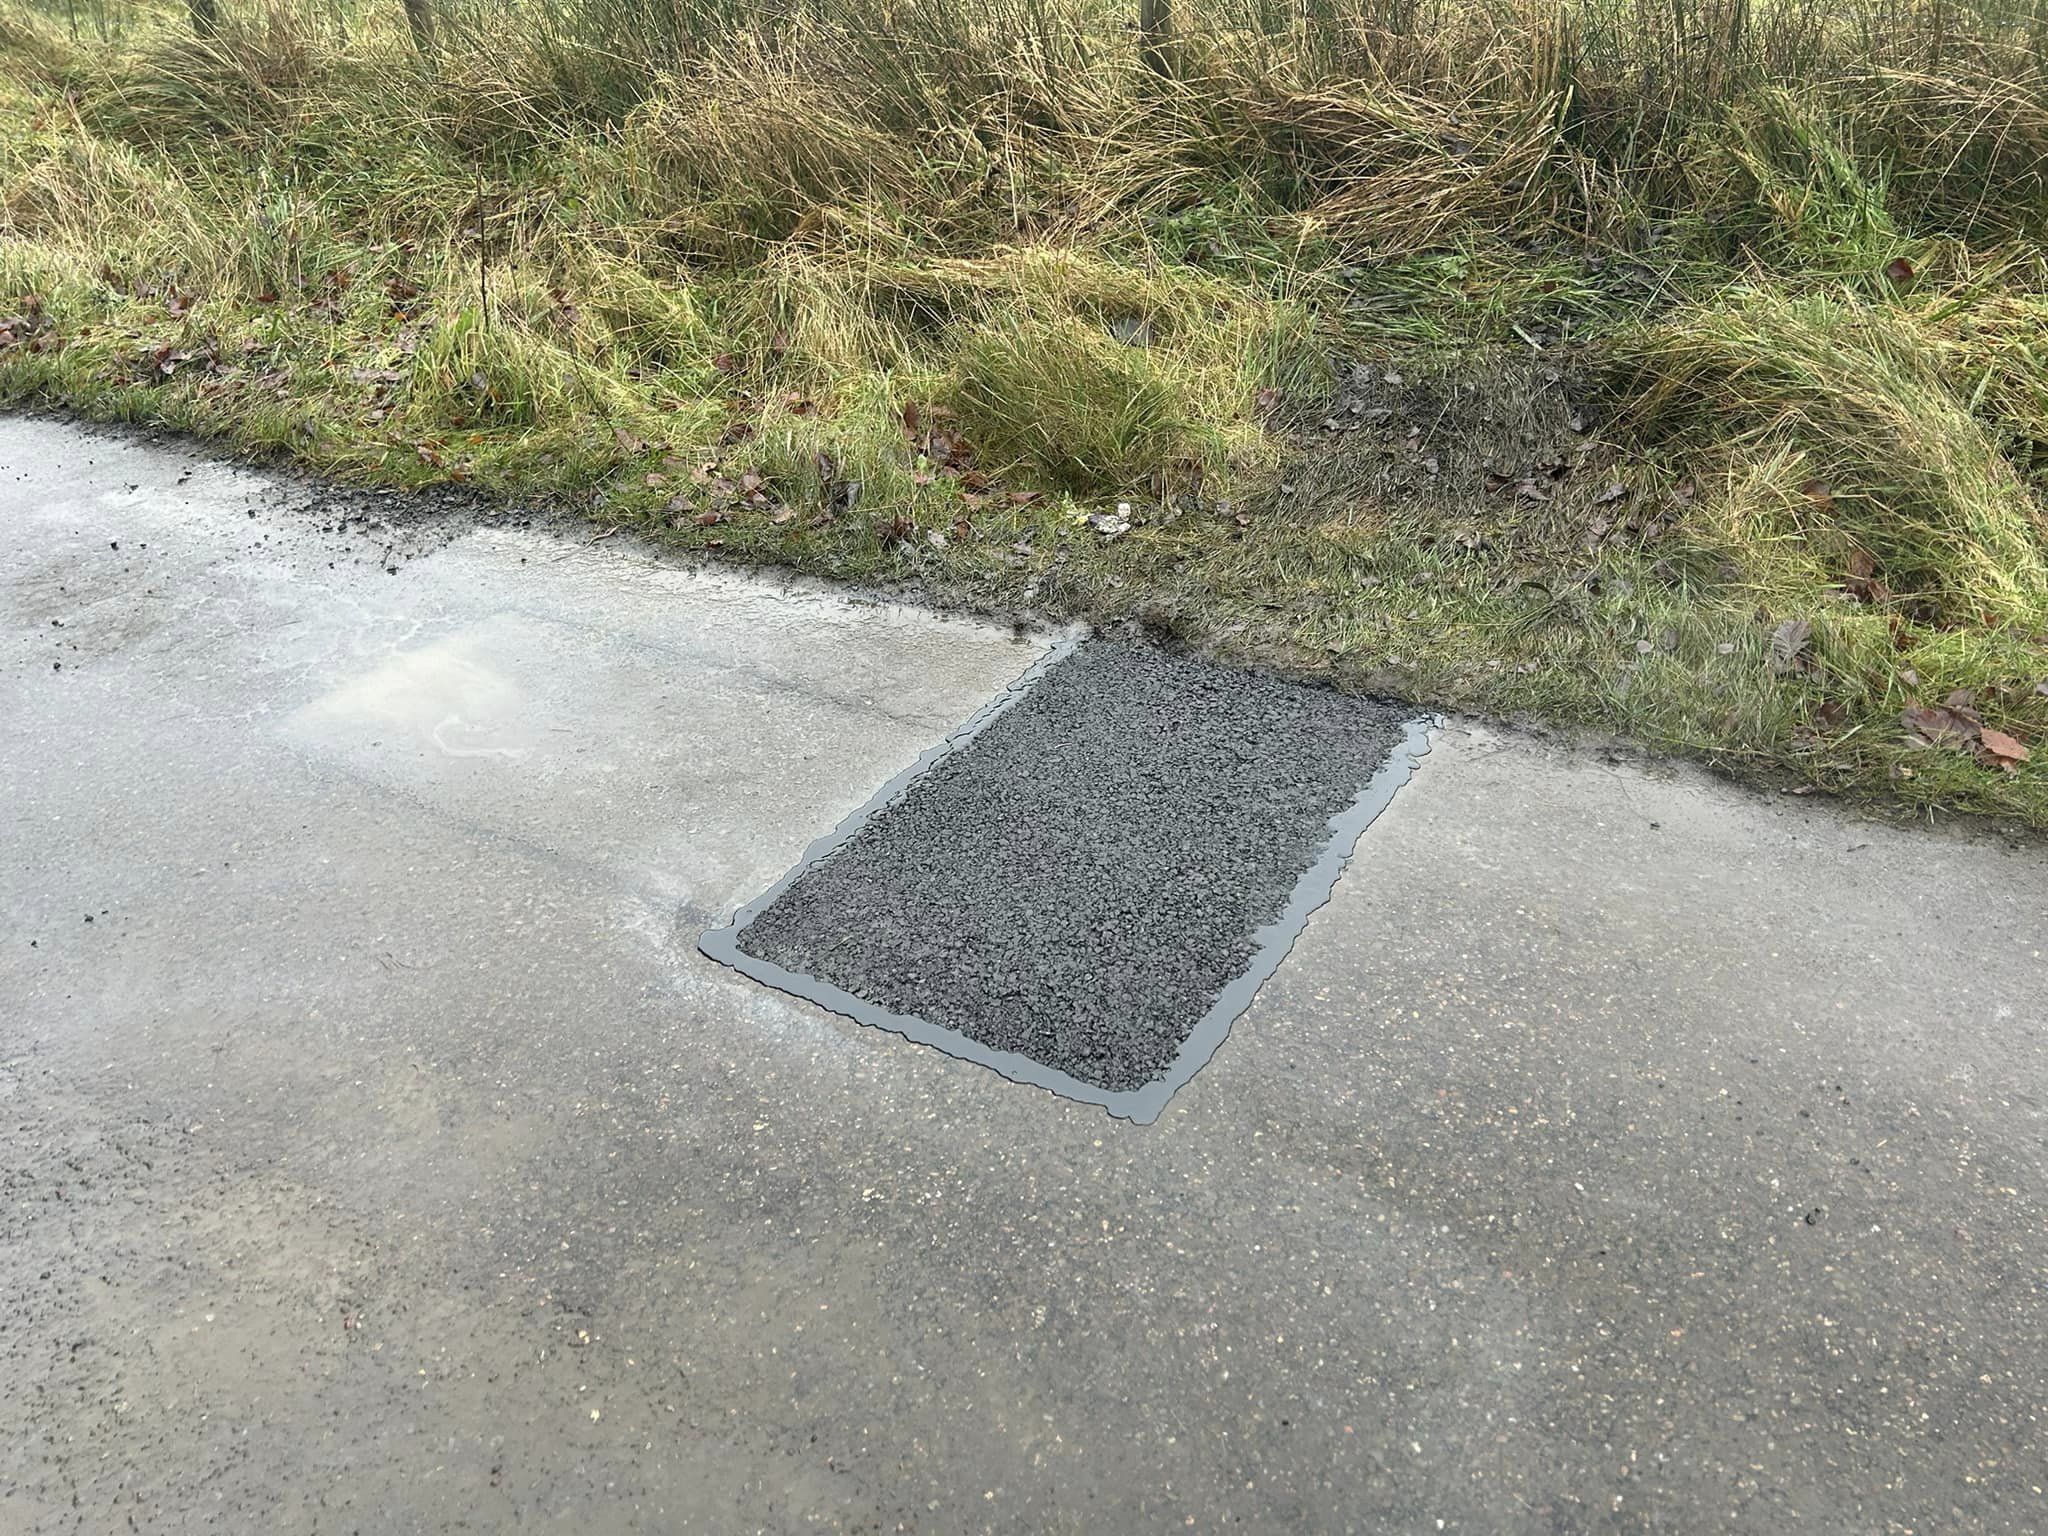 road repairs, fix potholes, tarmac patches, reinstatement - specialist contractors